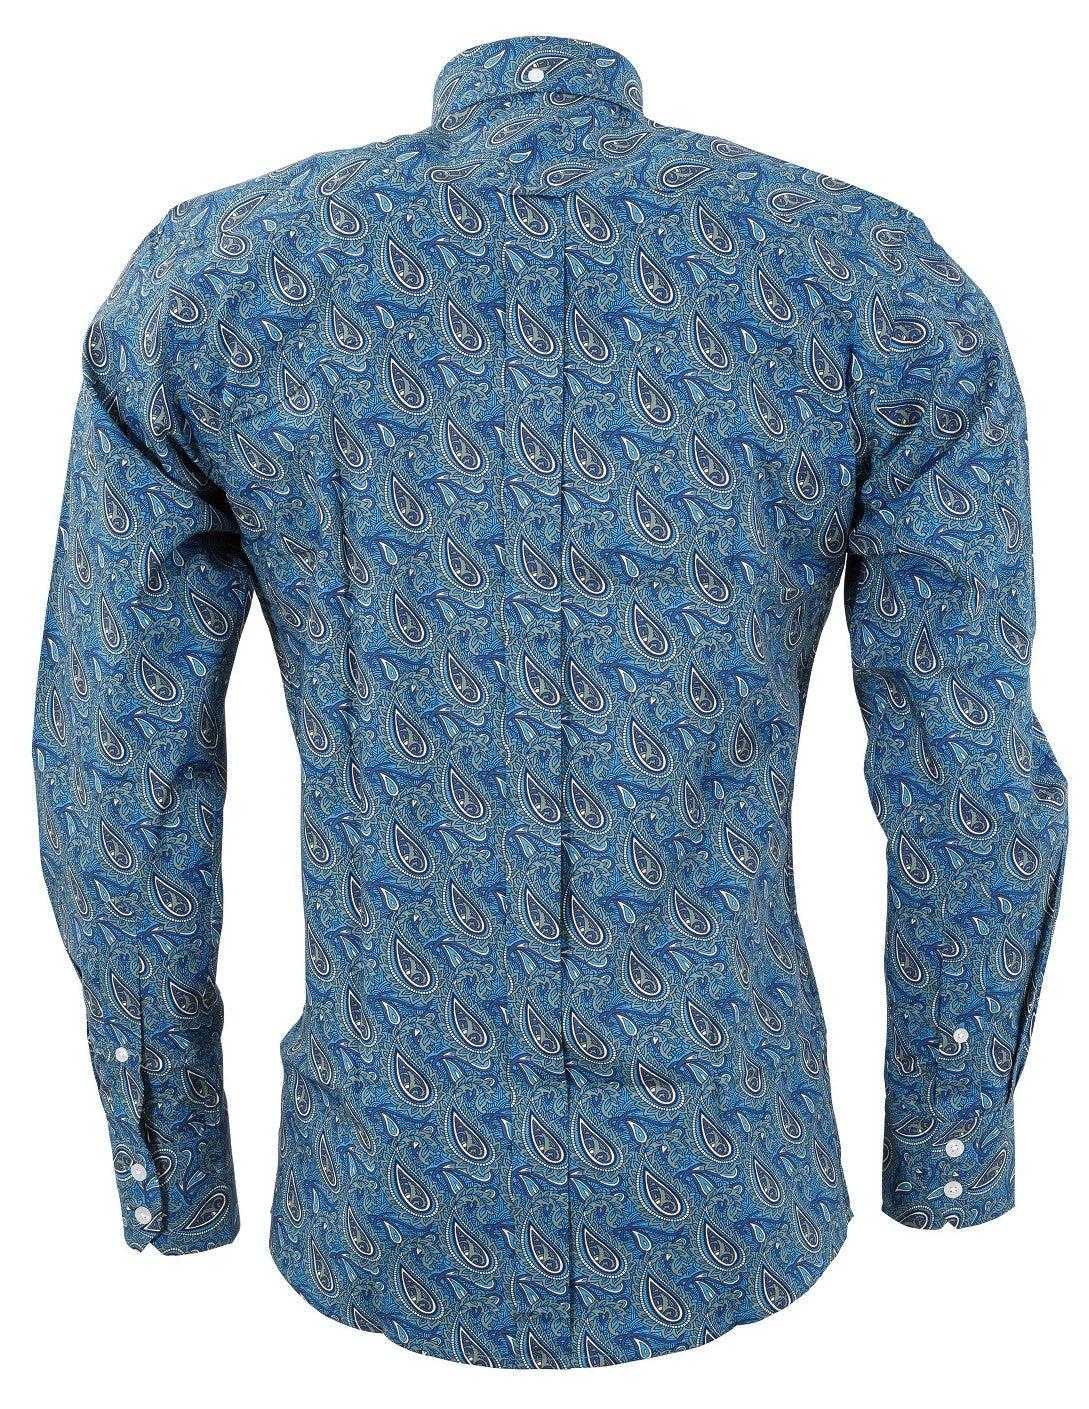 Camisas Relco paisley azul 100% algodón manga larga con botones